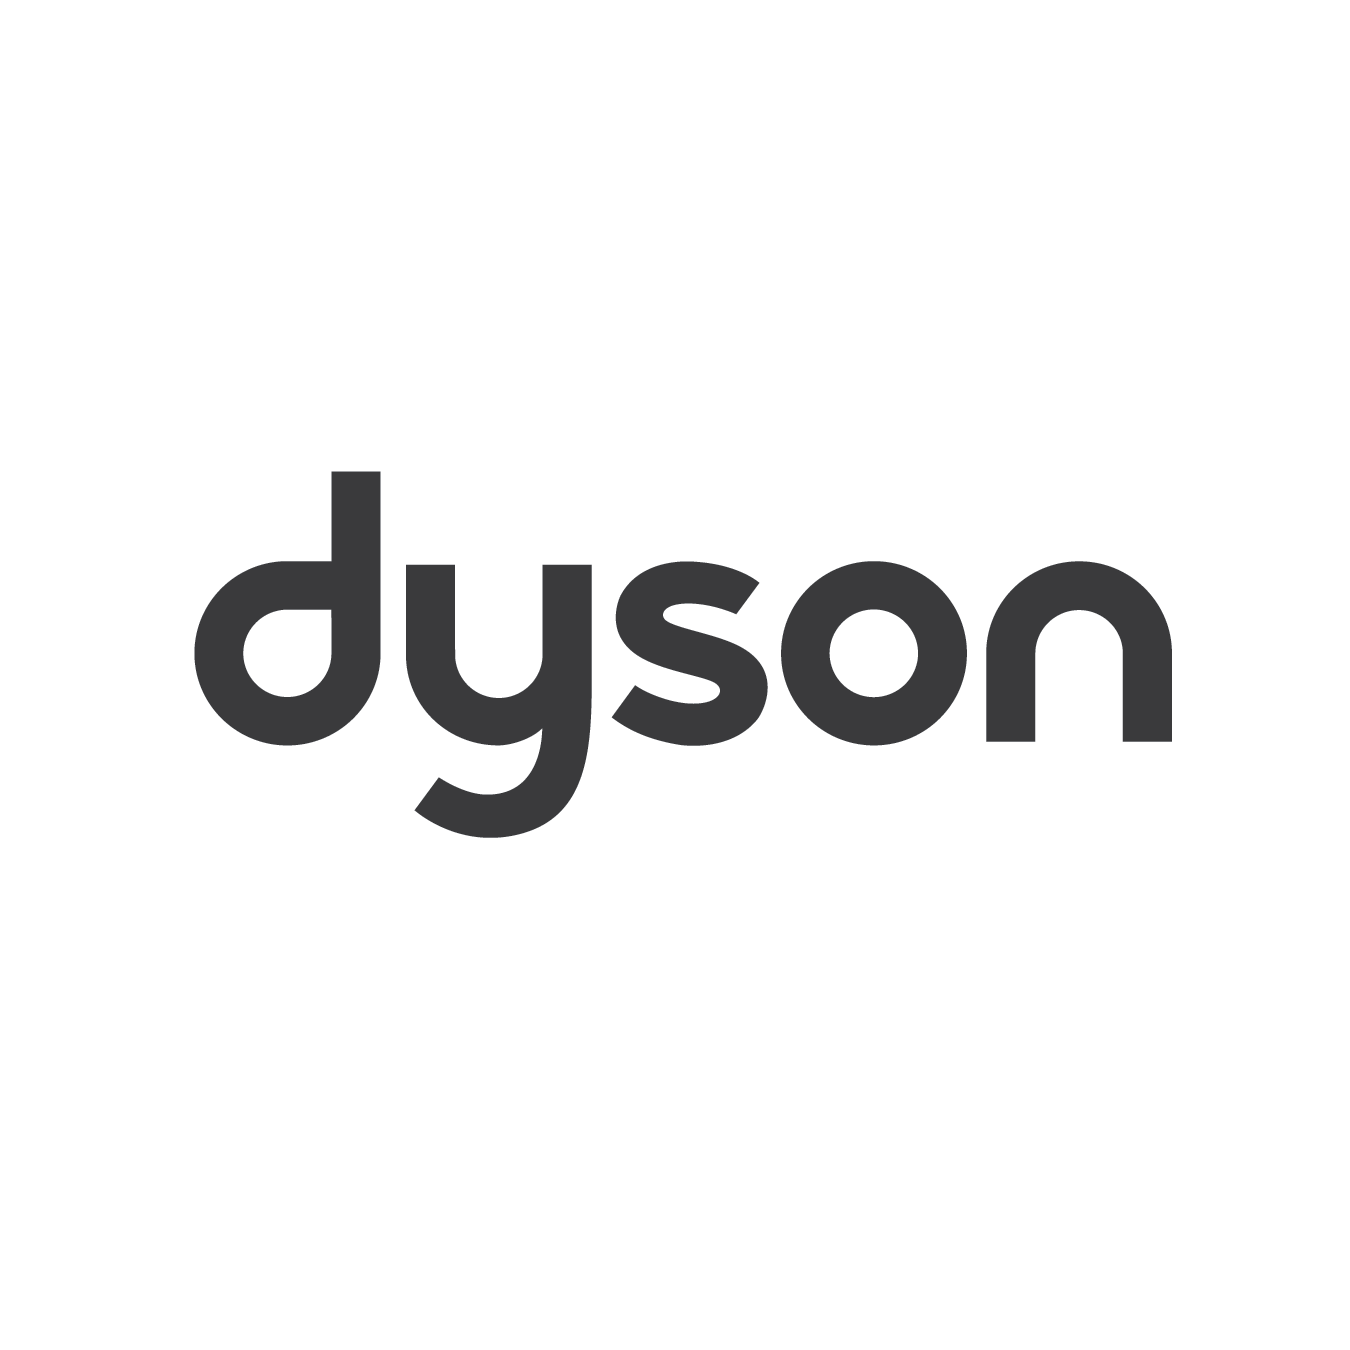 dyson.png